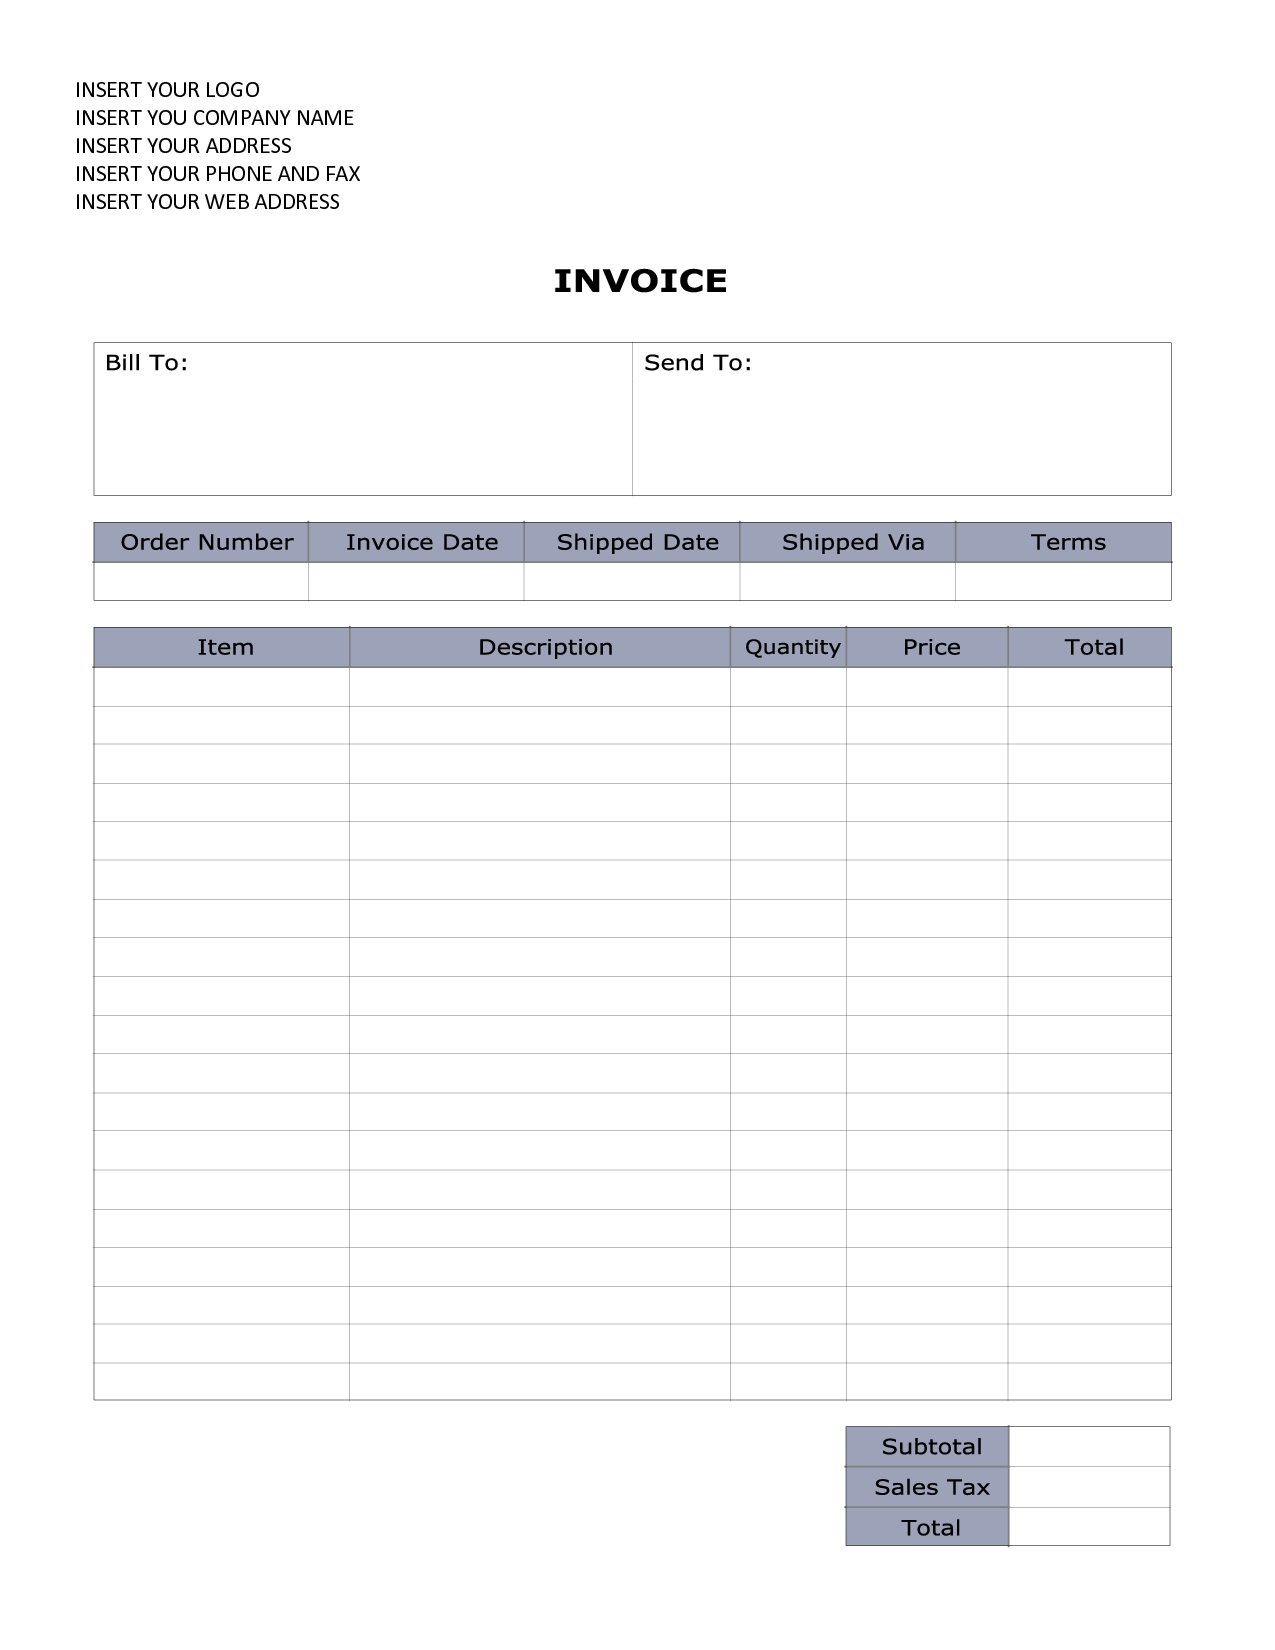 invoice sample word document printable invoice template word free printable invoice invoice 1275 X 1650